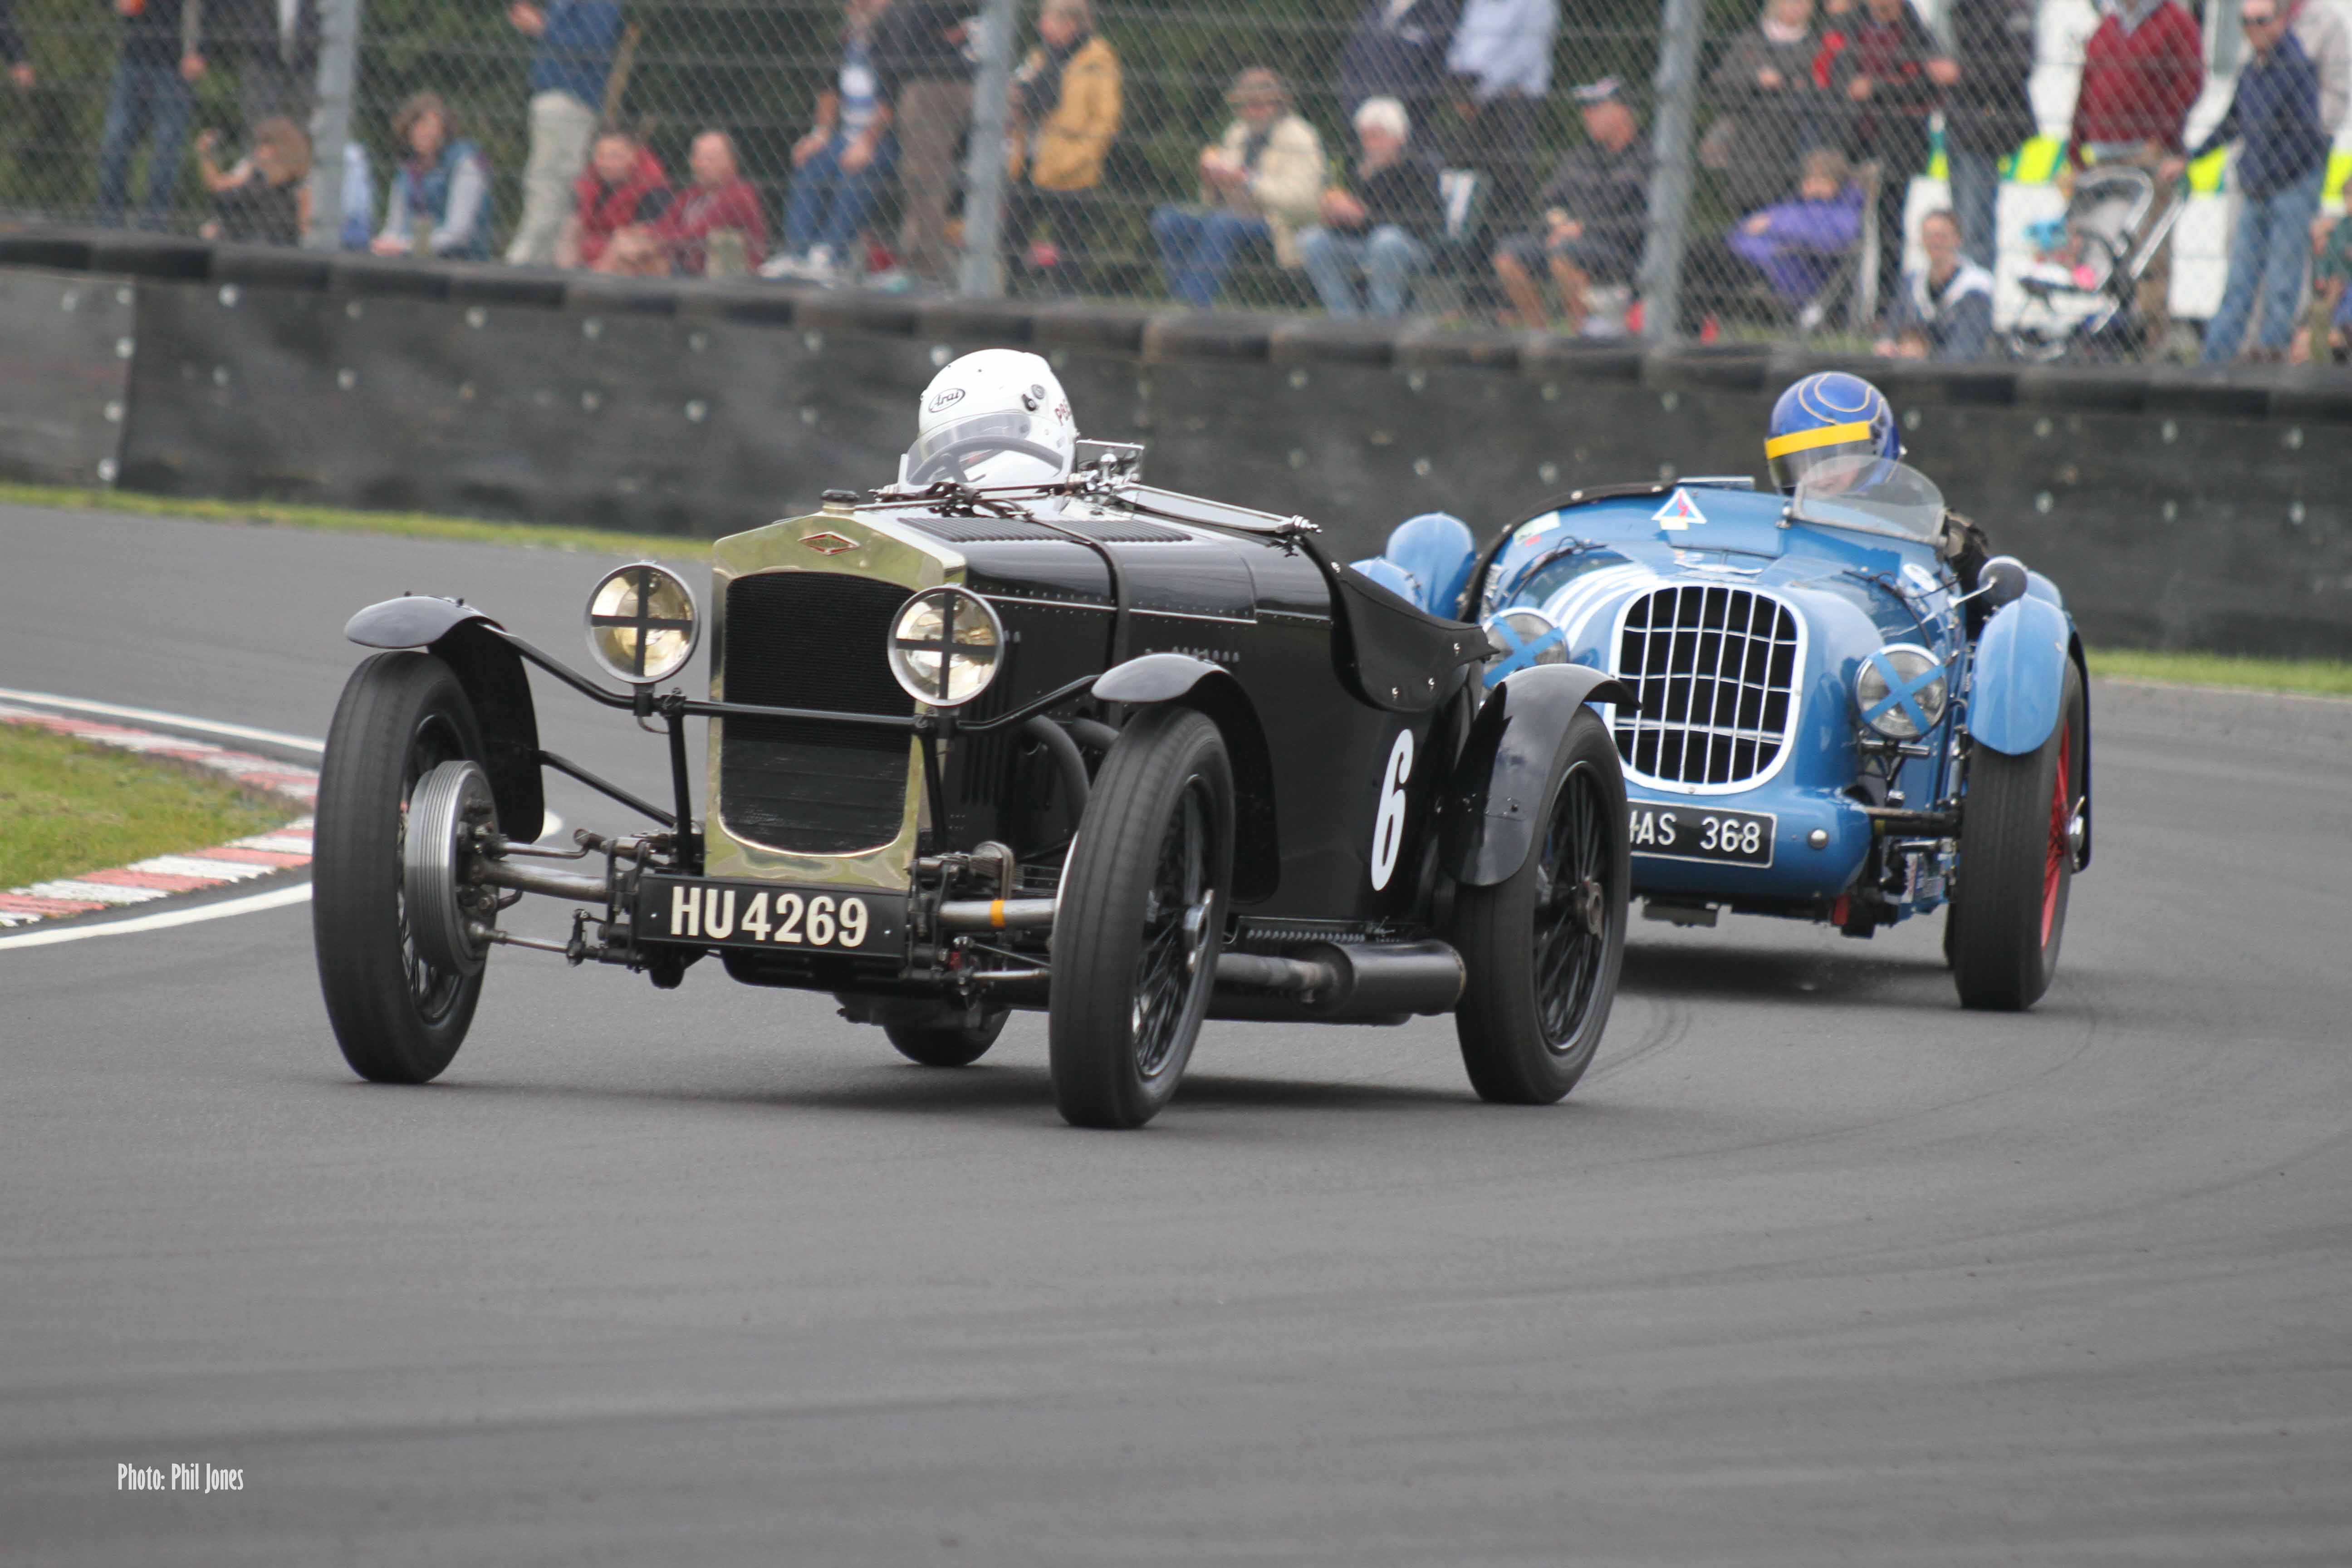 VSCC Pre-war Sports-Cars entertain at the Castle Combe Autumn Classic cover